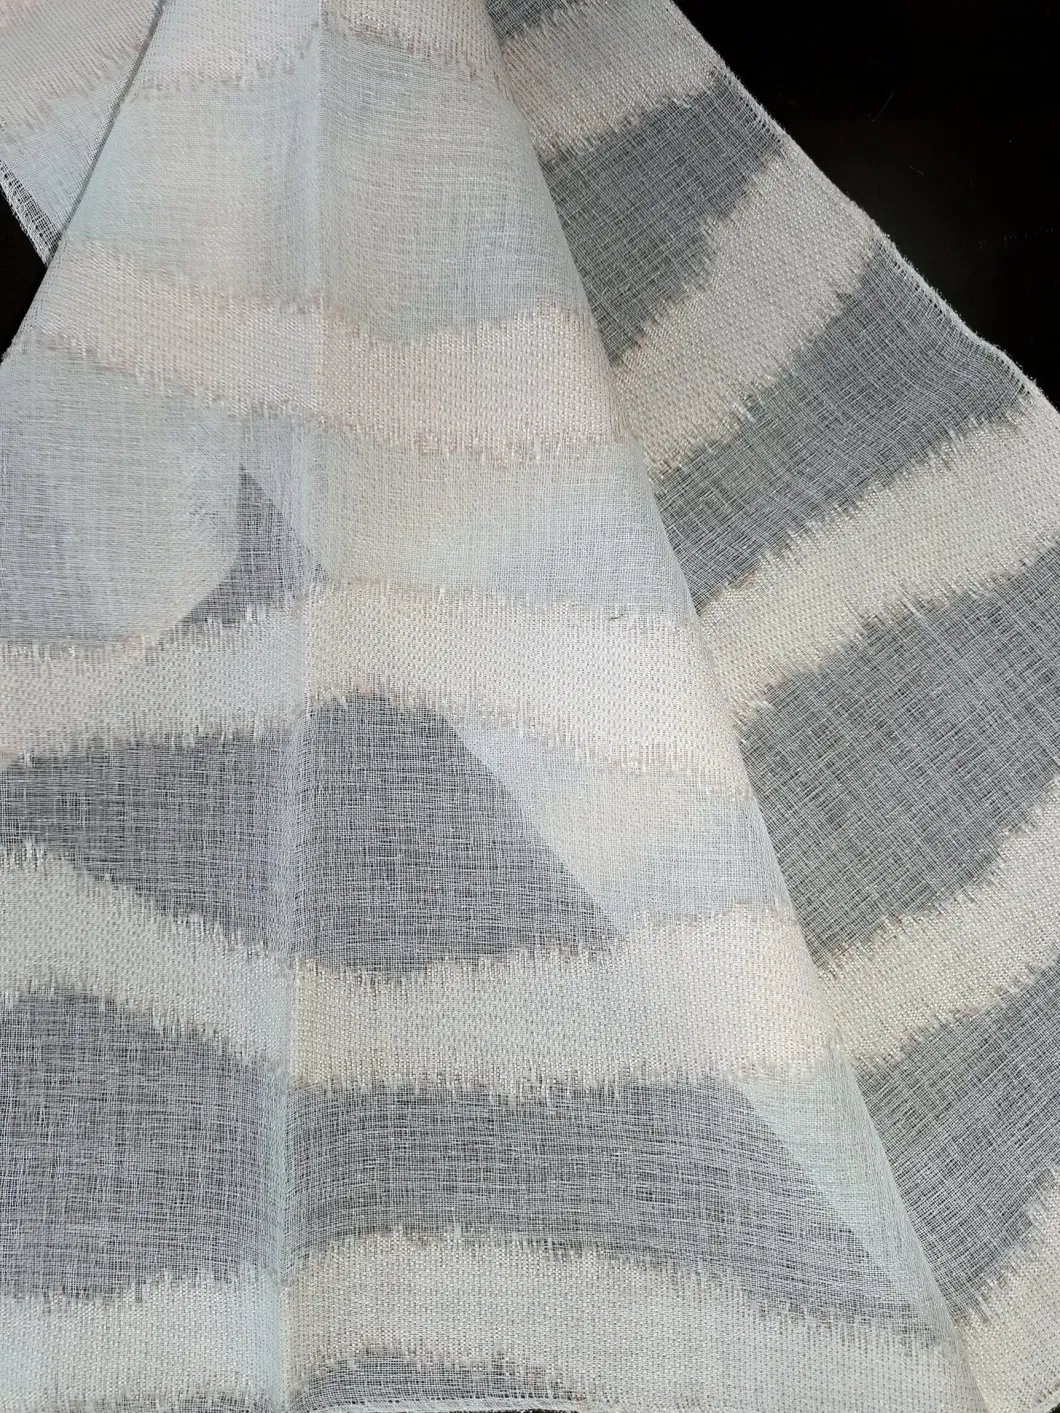 New Arrival Zebra Design of 100% Polyester Jacqarud Curtain Fabric